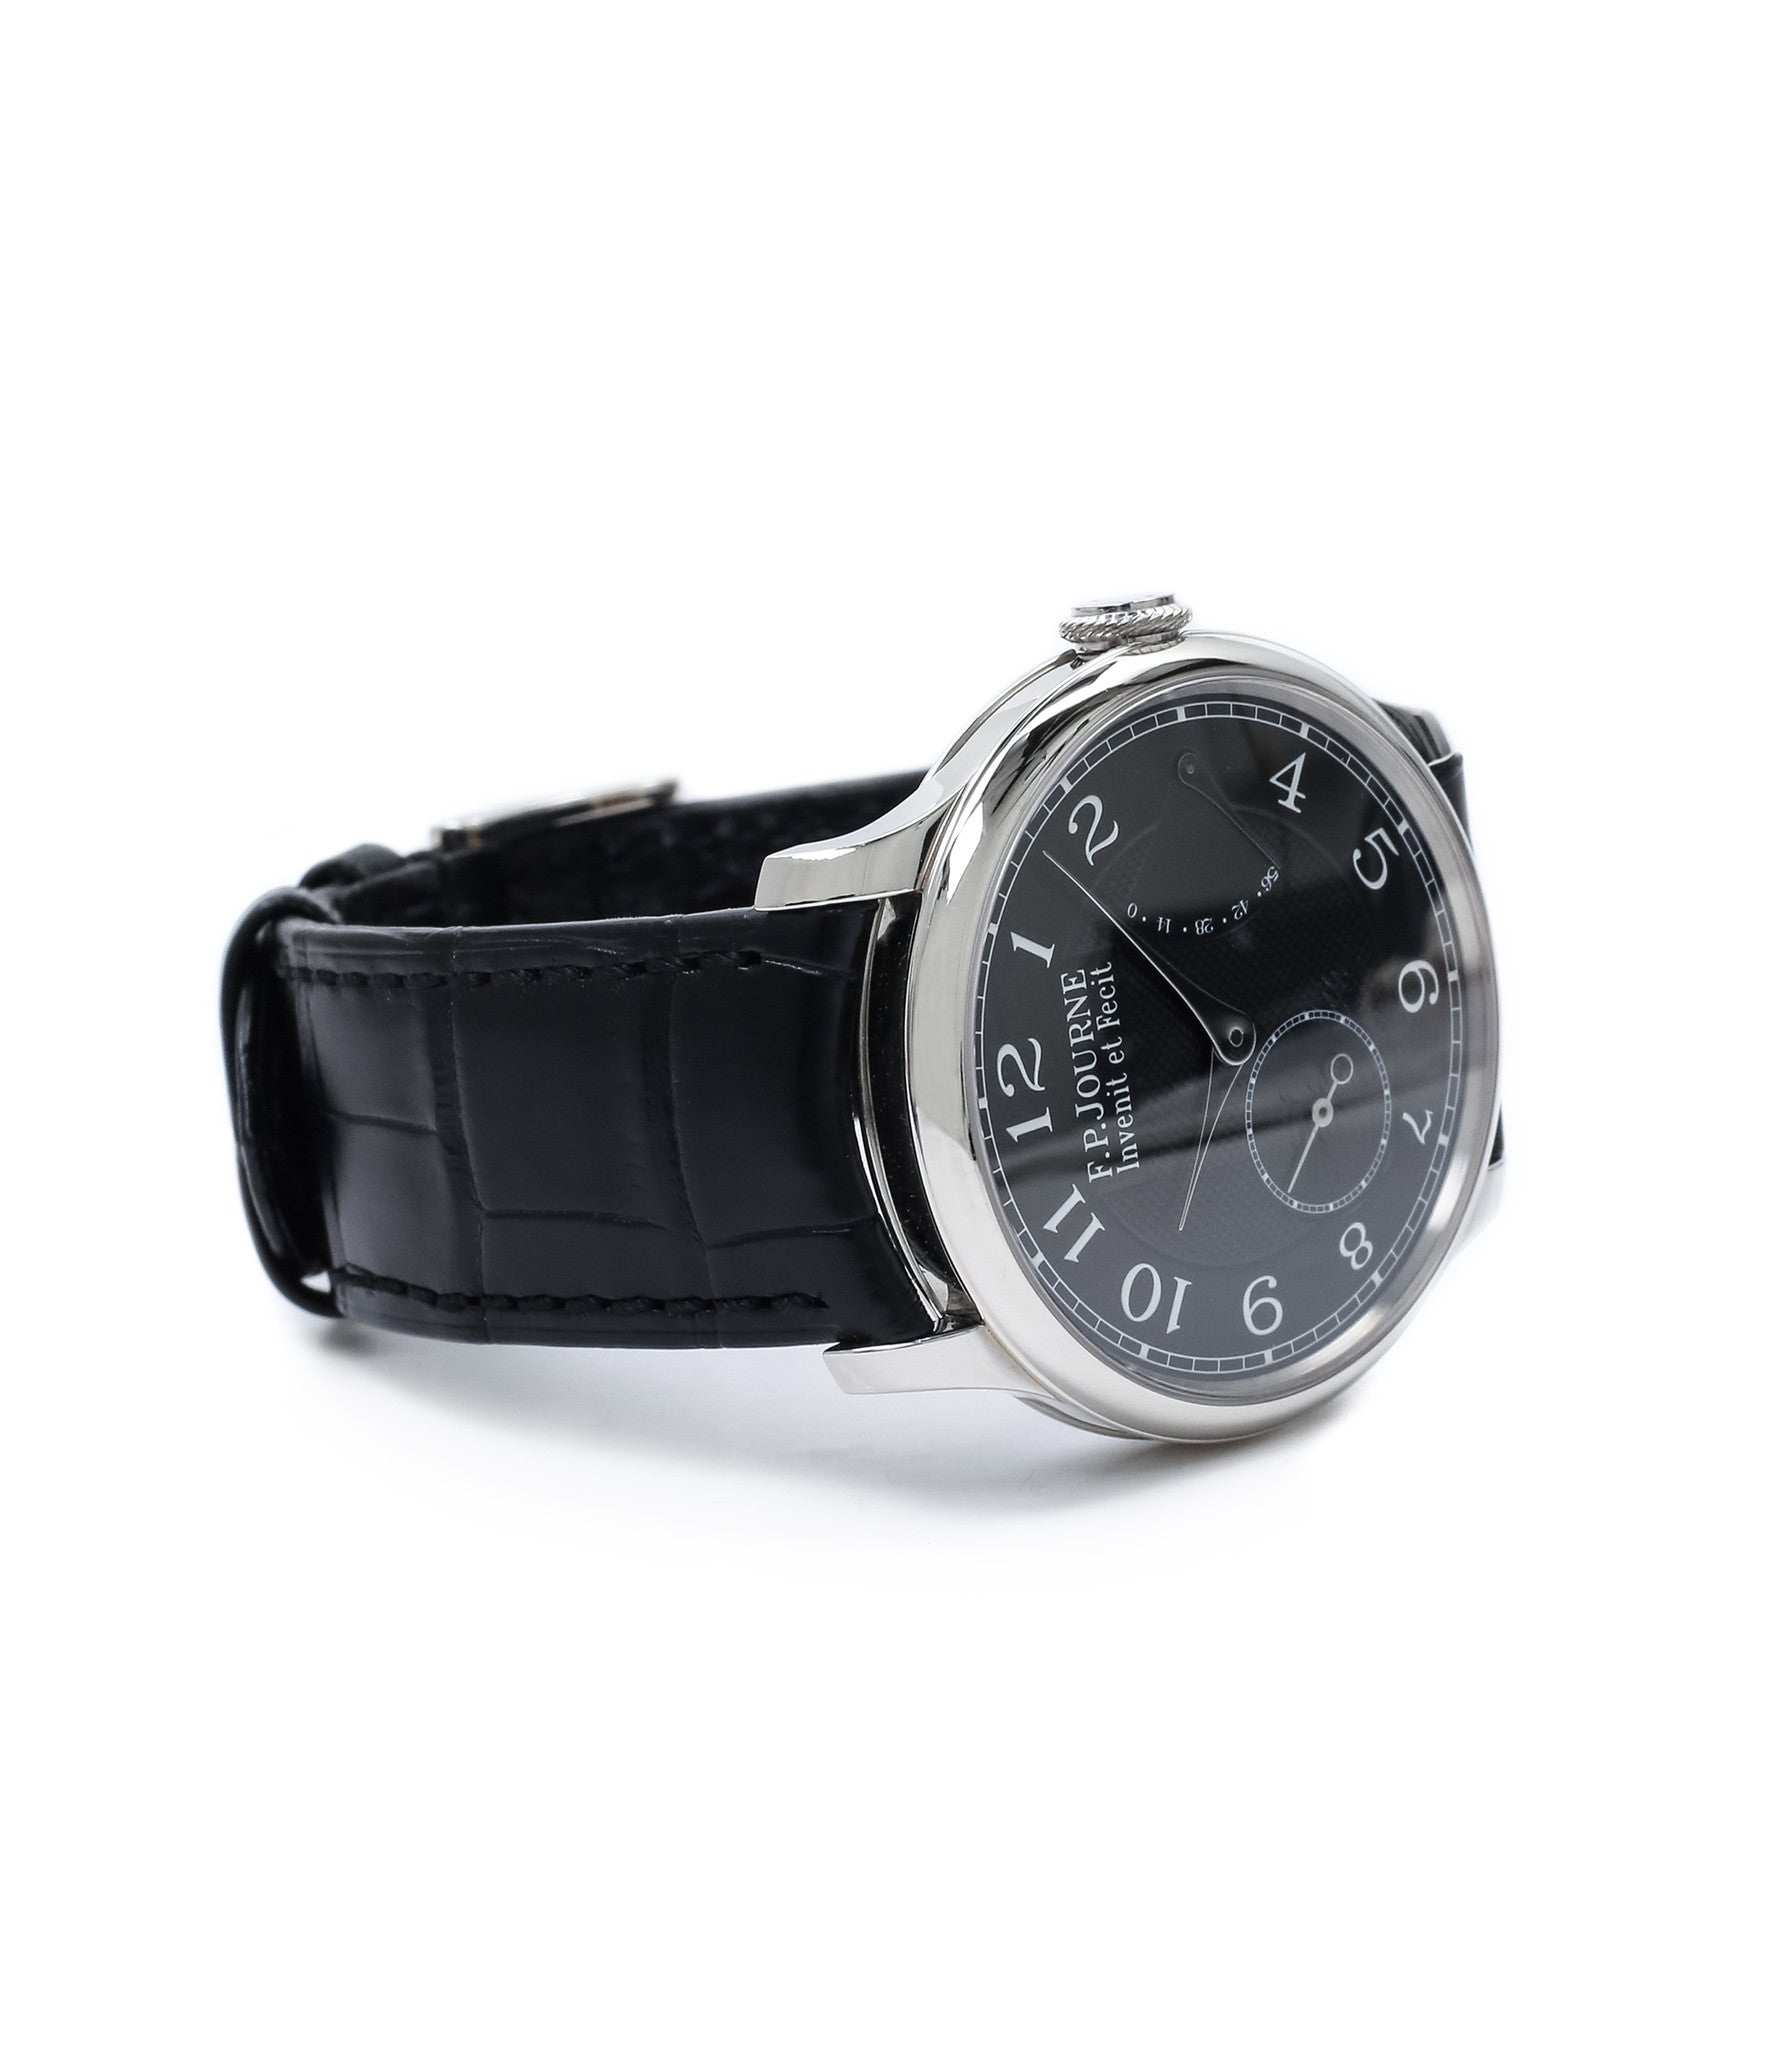 preowned F. P. Journe Chronometre Souverain Black label platinum 38 mm watch online at A Collected Man